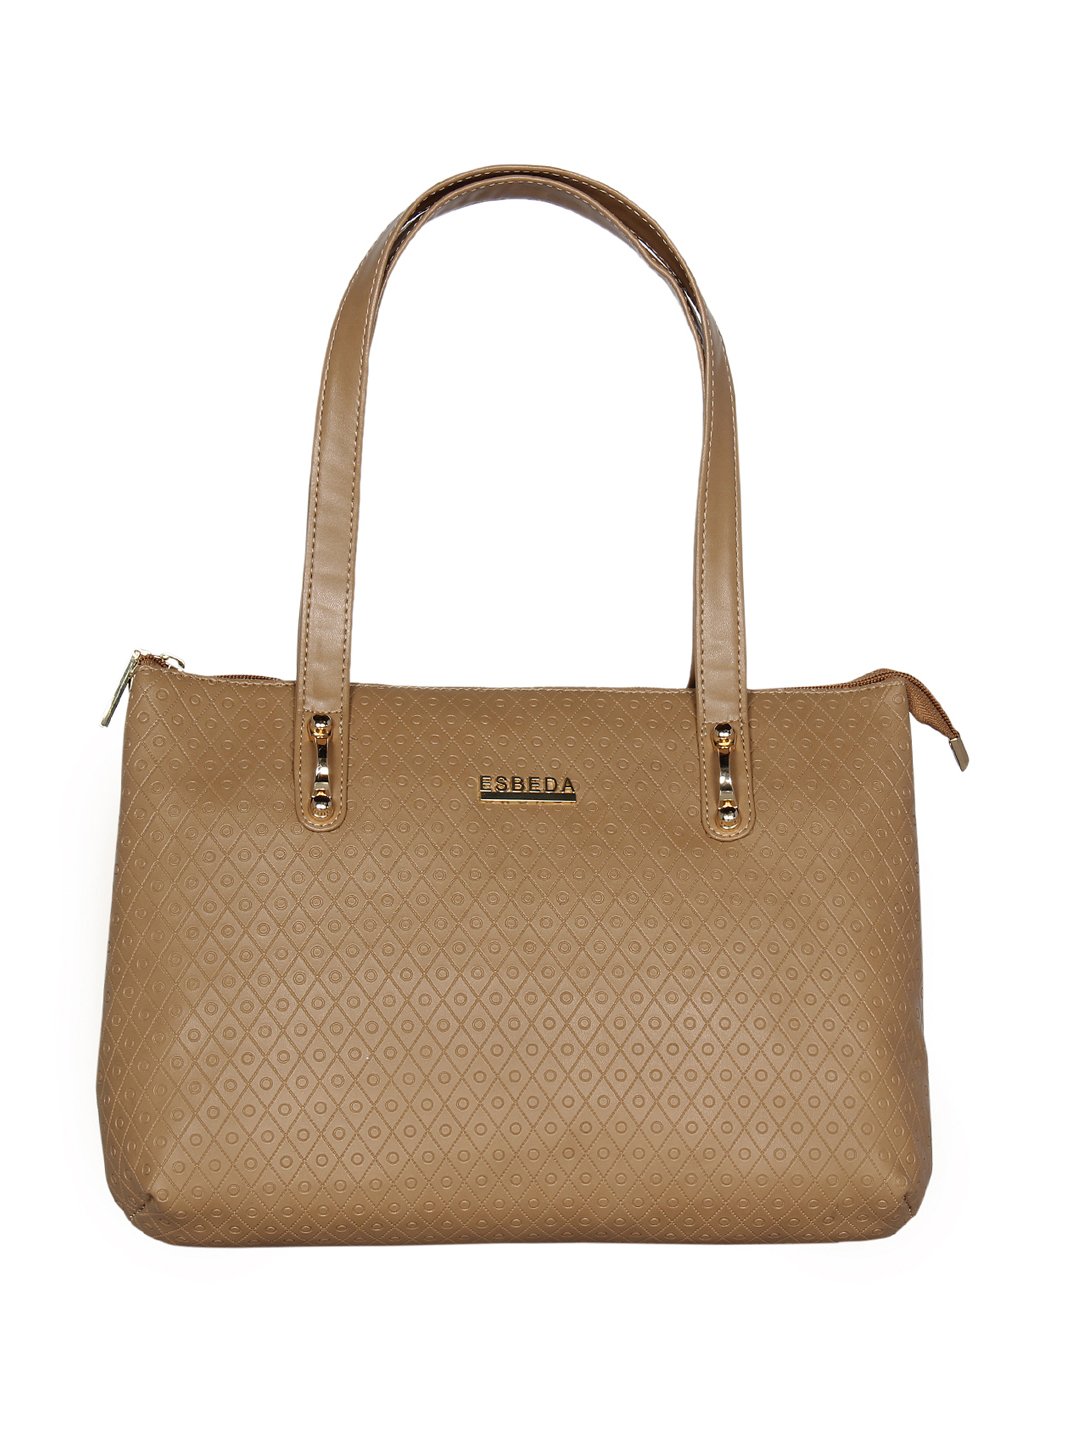 ESBEDA Beige Color Glossy shell Lightweight Handbag For Women